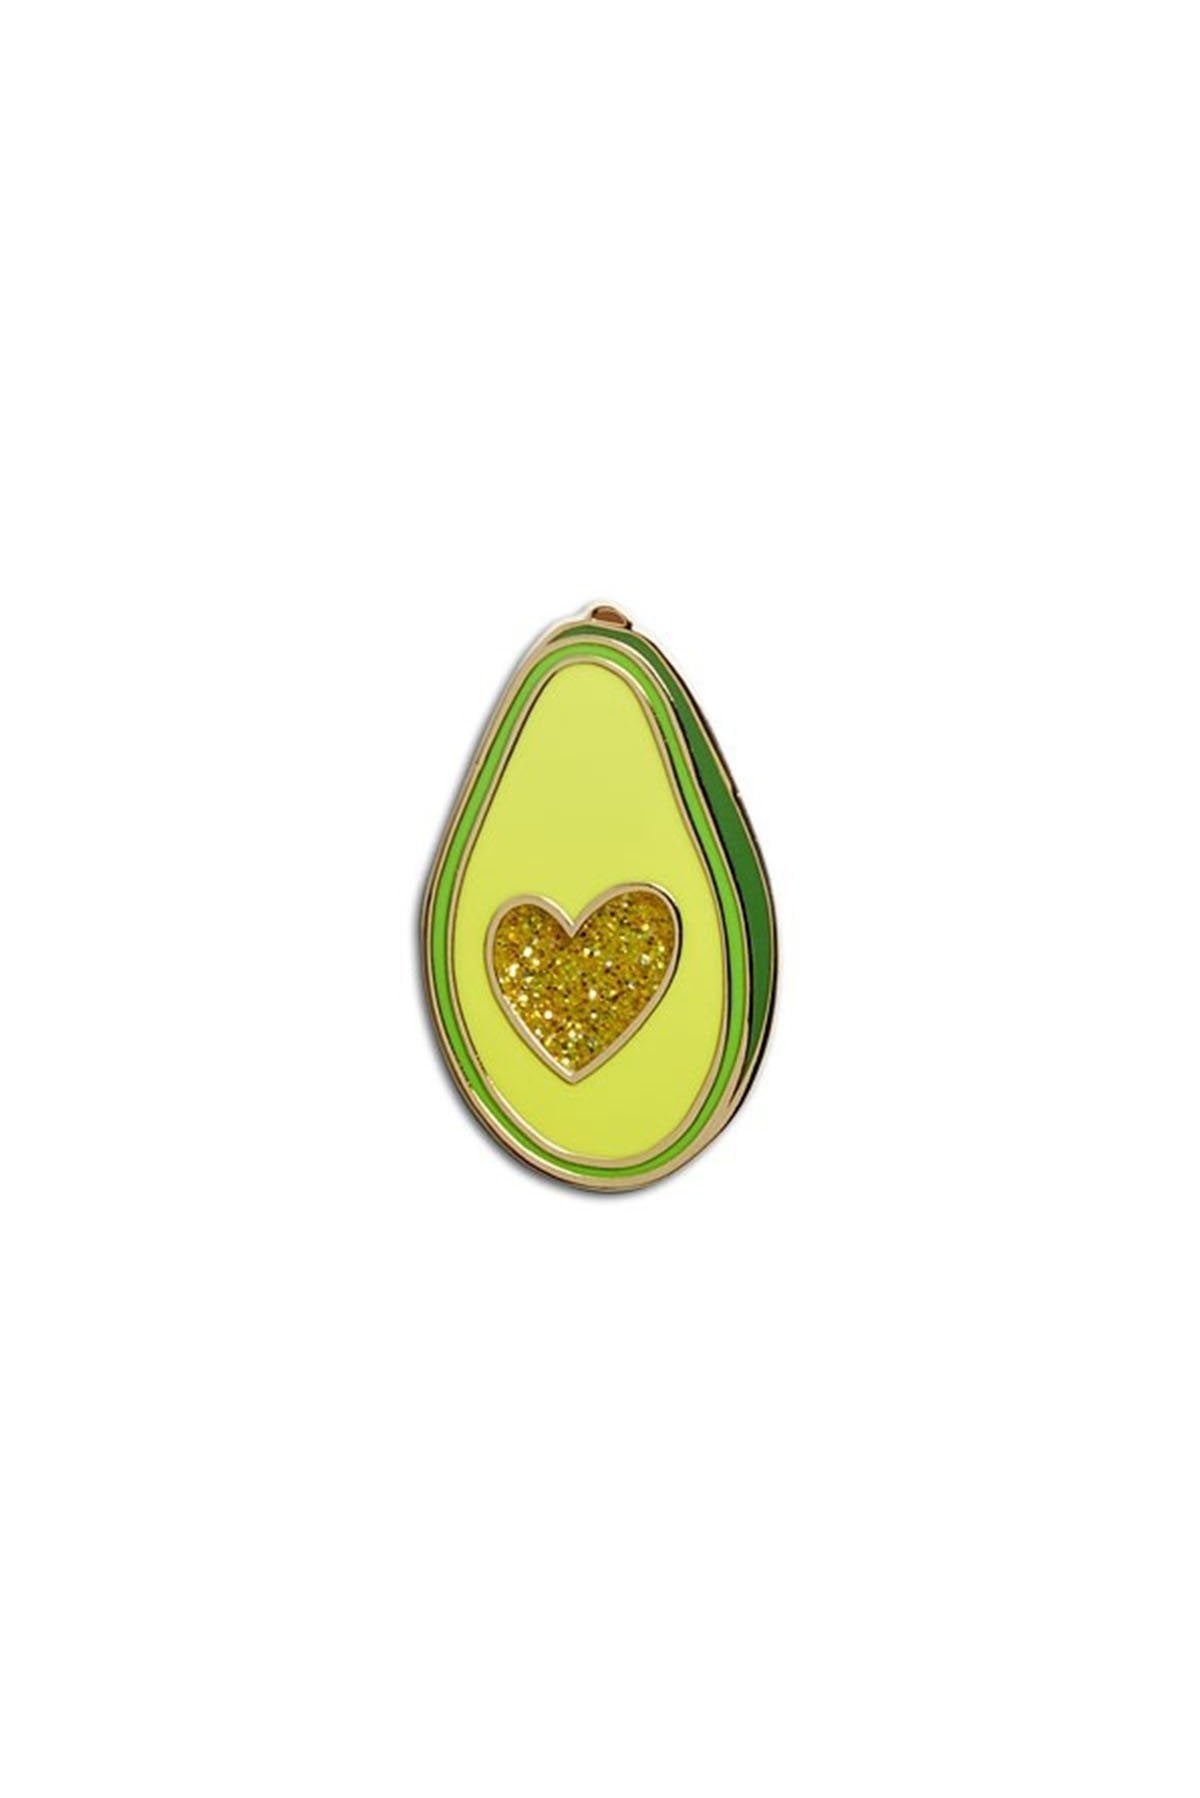 The Found Enamel Pin Avocado Glitter Heart